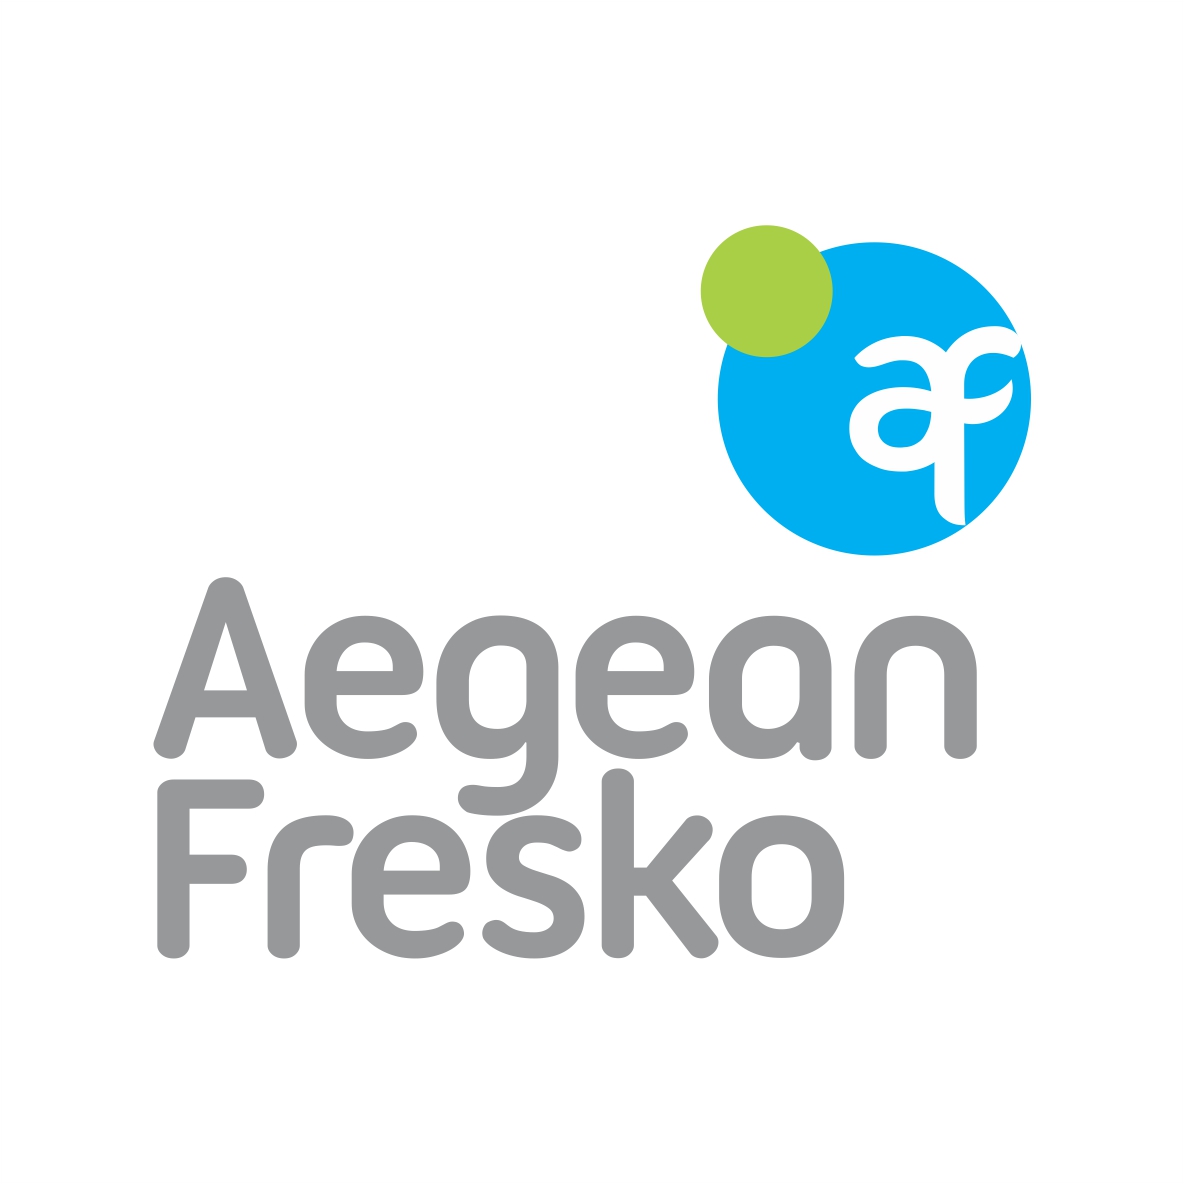 AEGEAN FRESKO LOGO PRINT Q